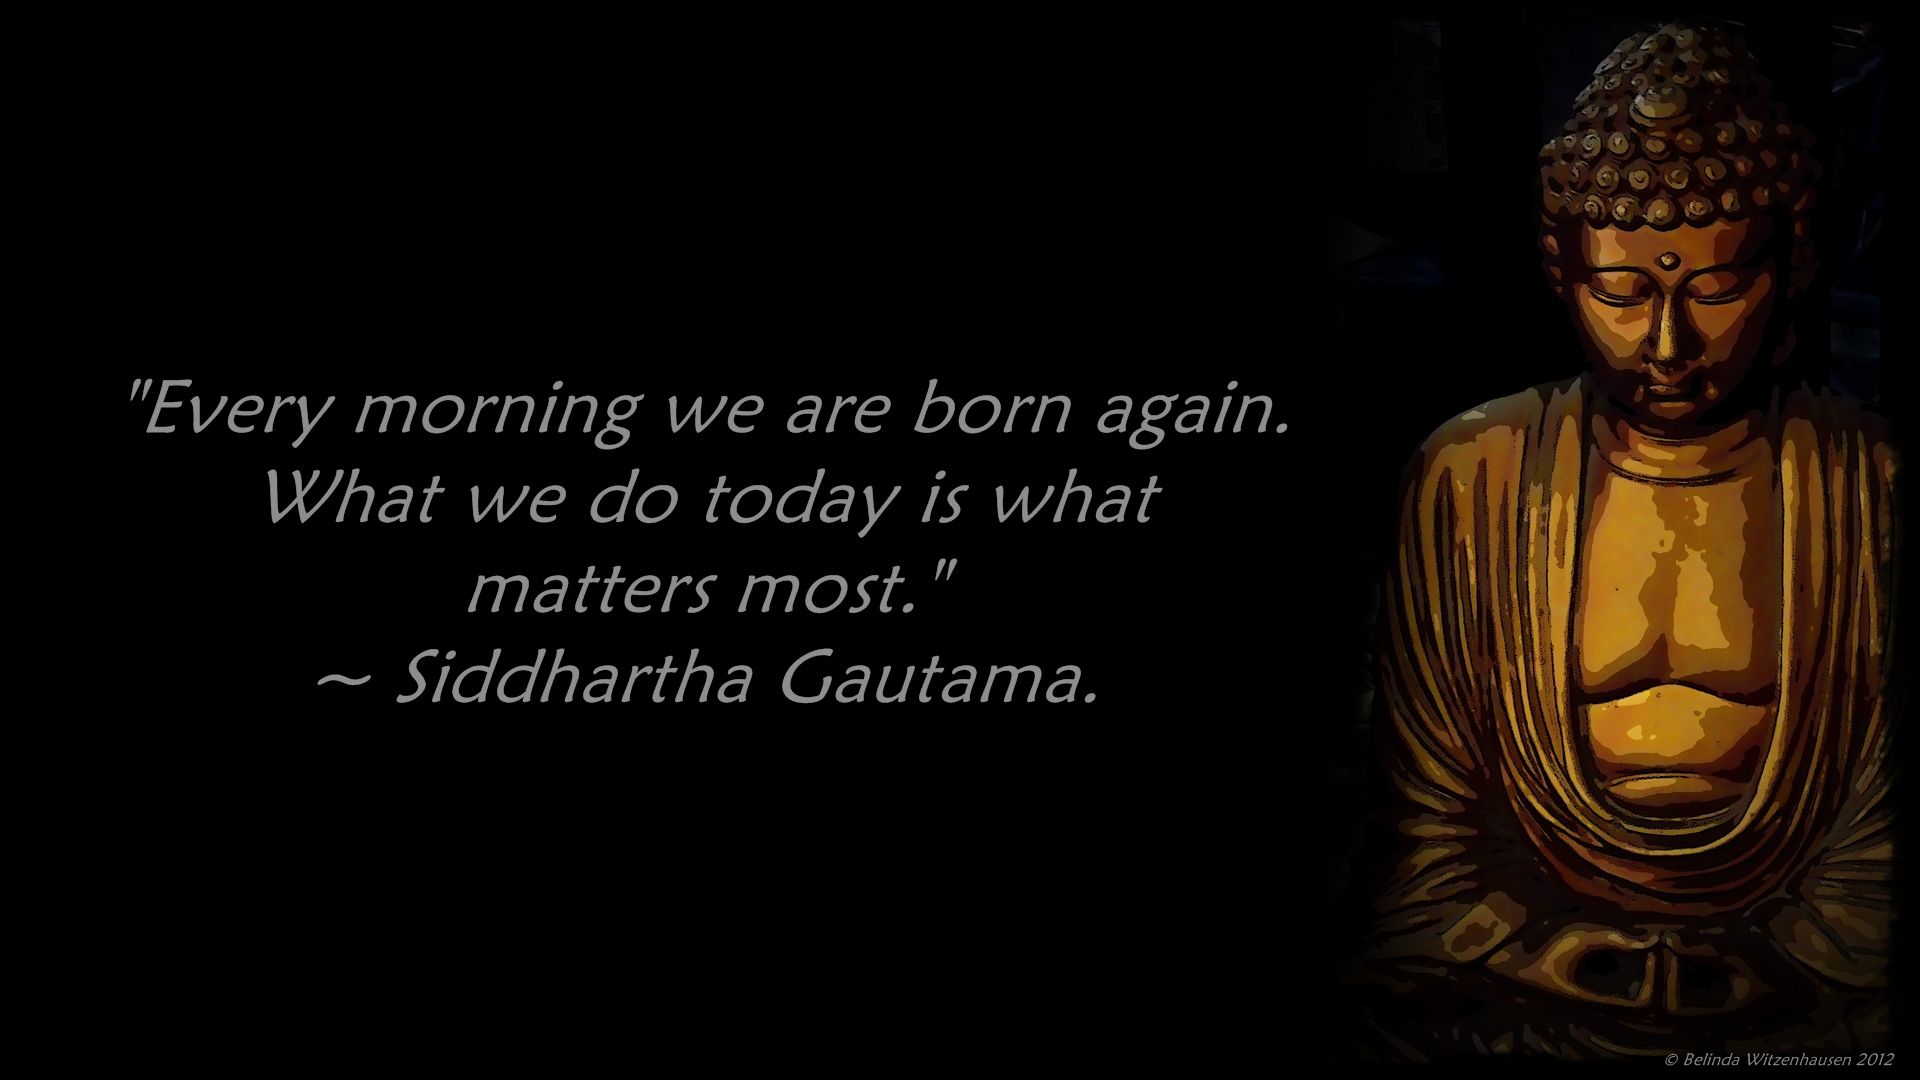 Gautama Buddha Wallpaper With Quotes Allpix.Club